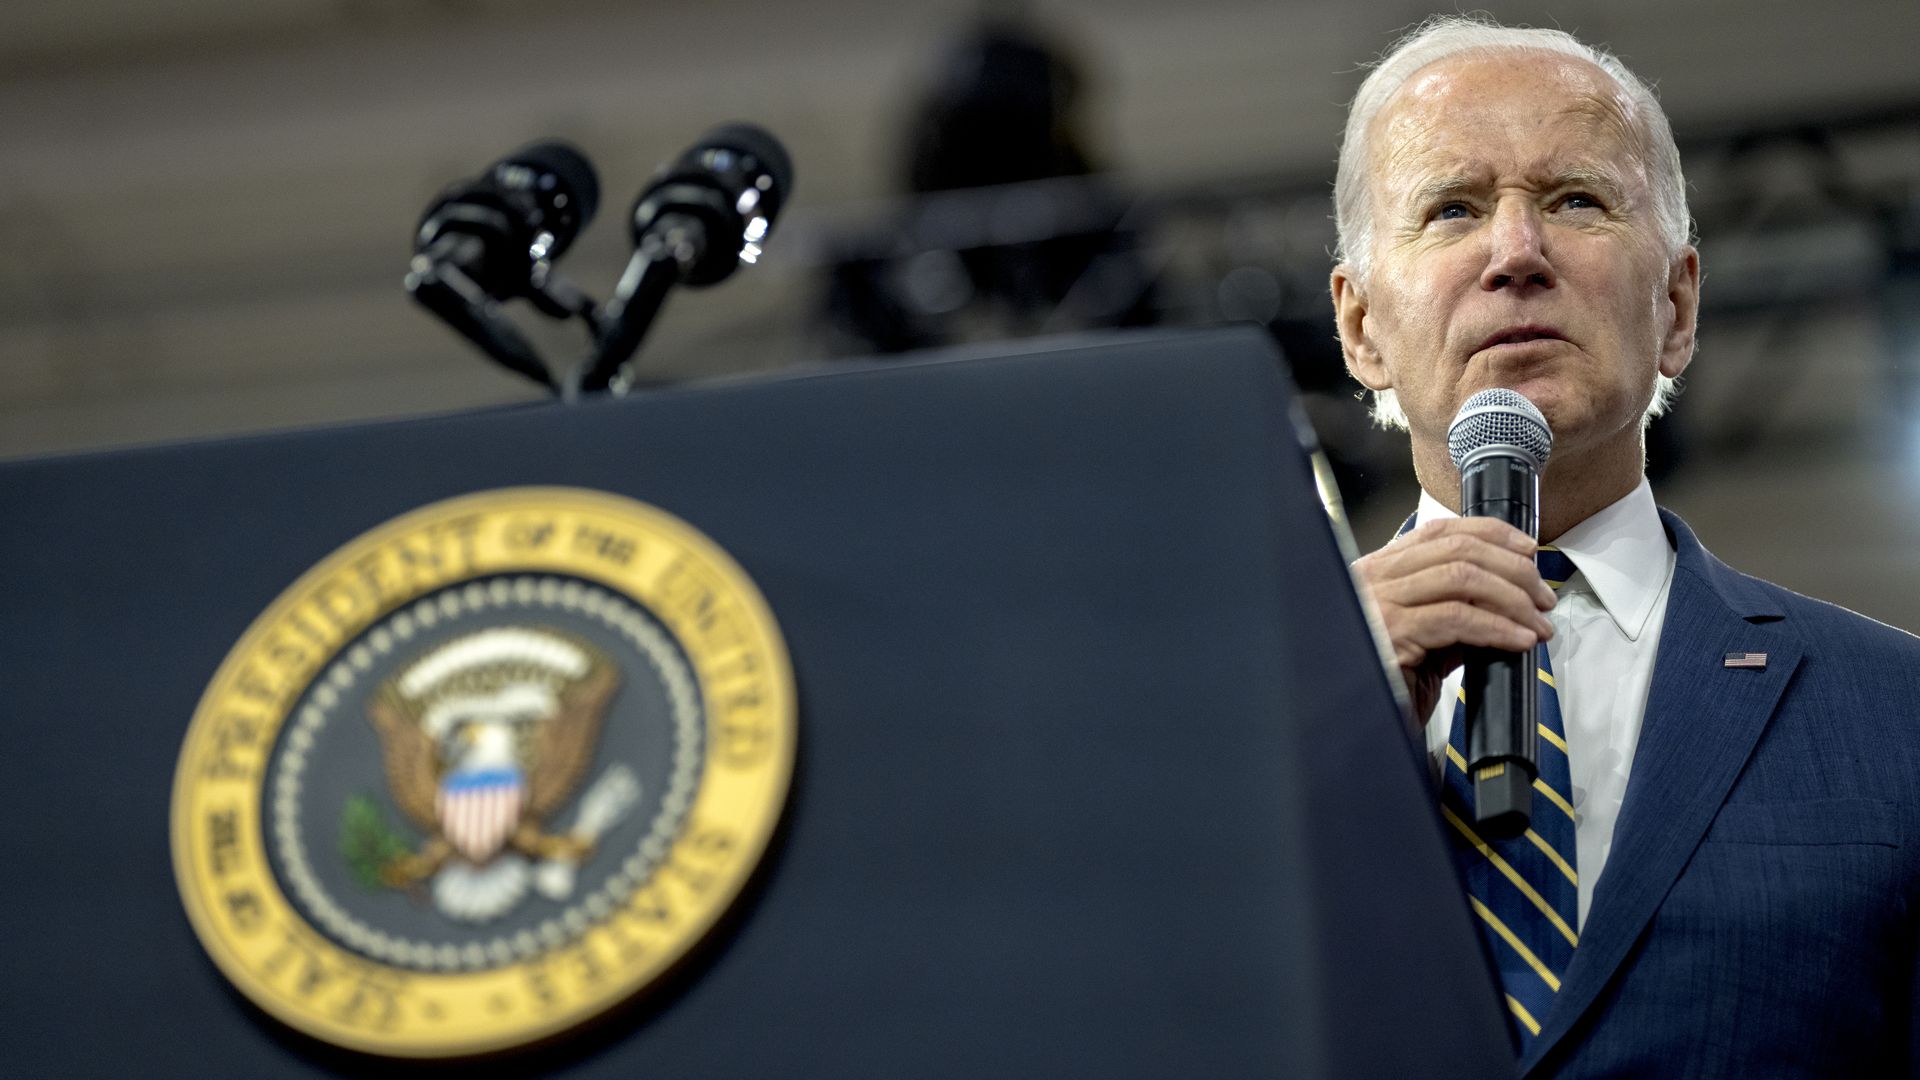 Joe Biden at a podium